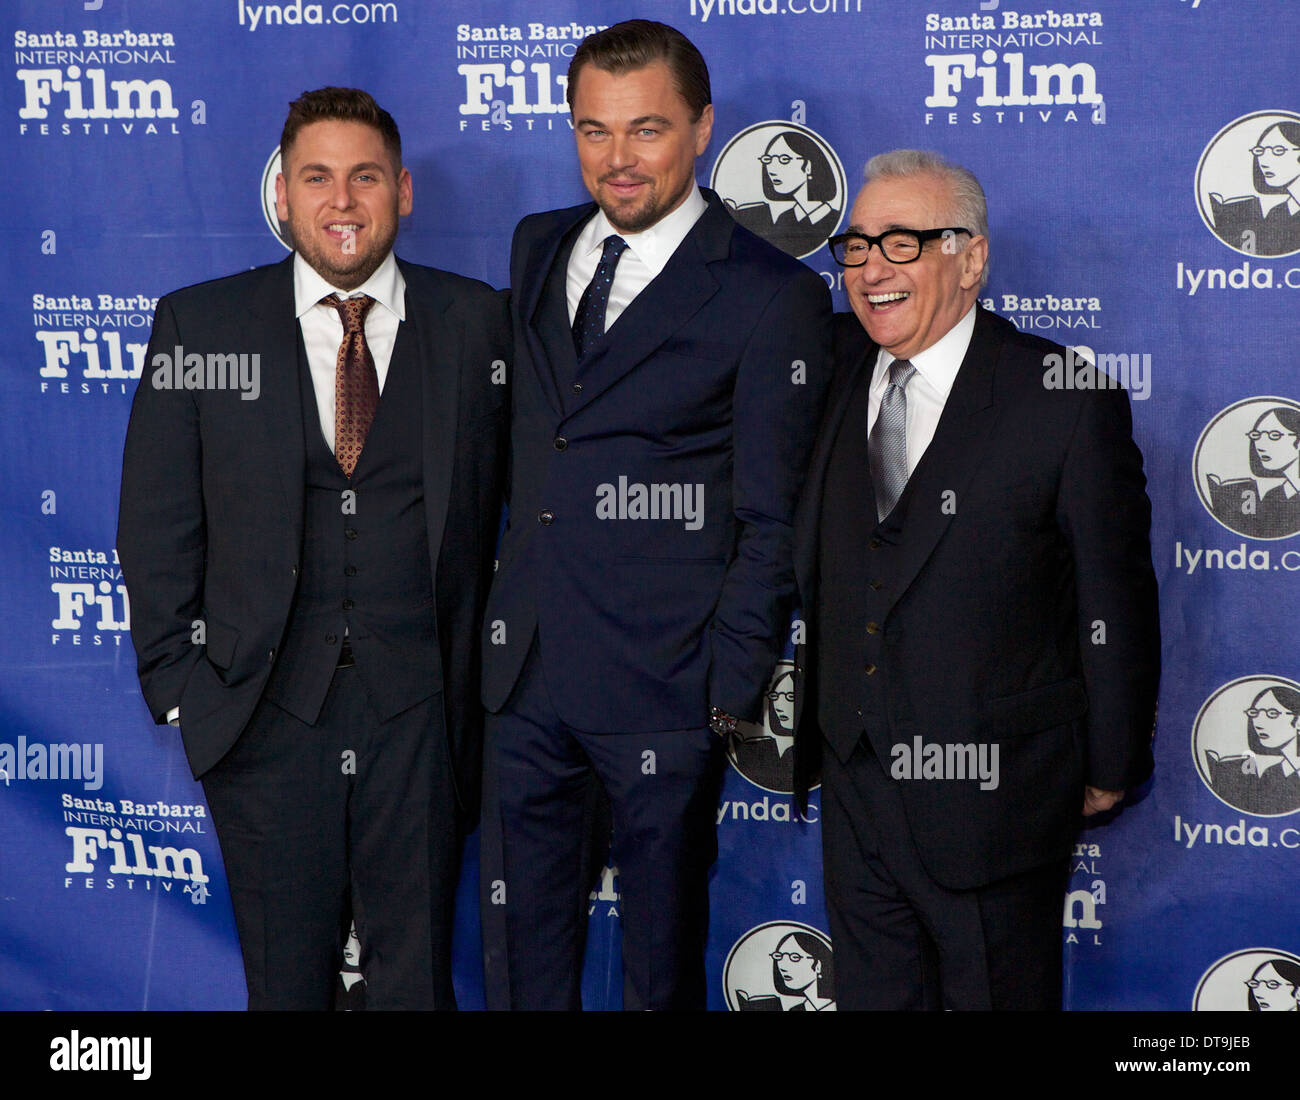 Jonah Hill, Leonardo DiCaprio and Martin Scorsese on the red carpet at the 2014 Santa Barbara International Film Festival Stock Photo